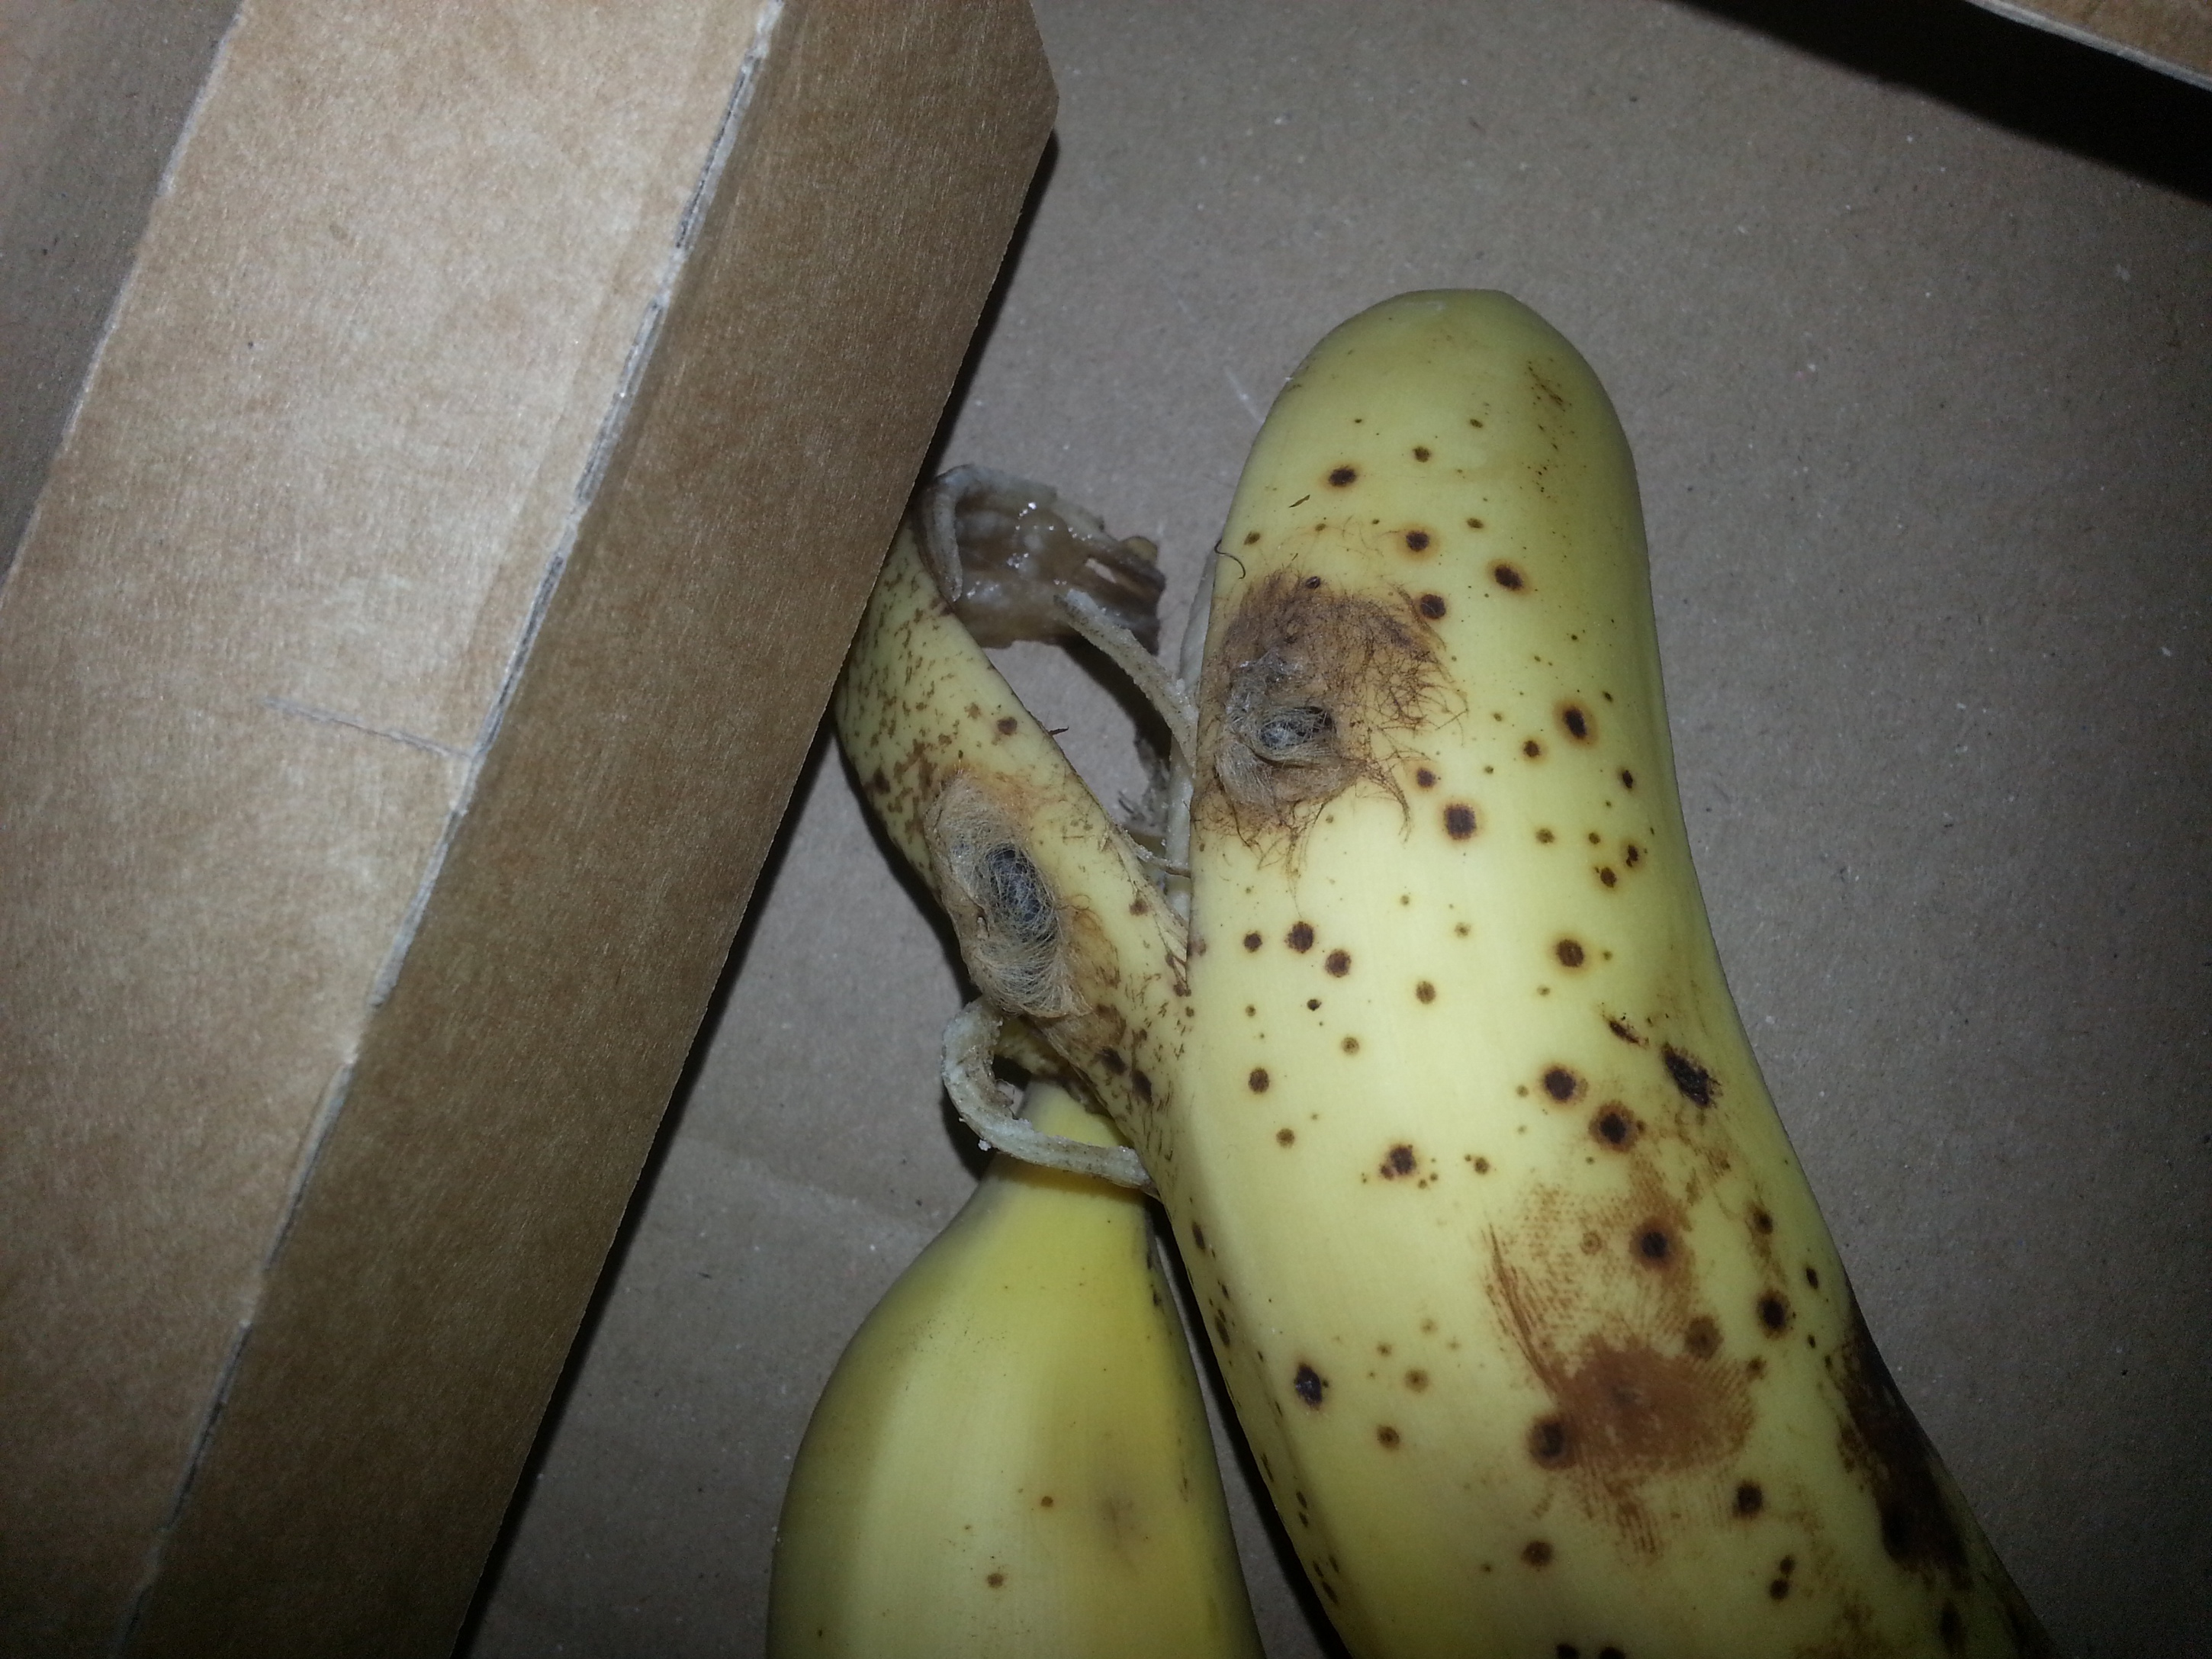 Kokons in Bananen! - Angst vor giftigen Spinnen (Insekten, Banane, giftig)